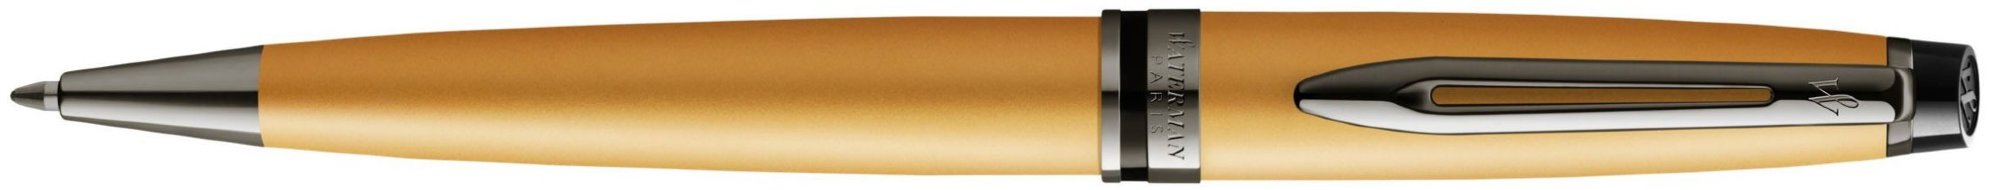 Ручка шариковая Waterman Expert DeLuxe Metallic Gold RT M синие чернила